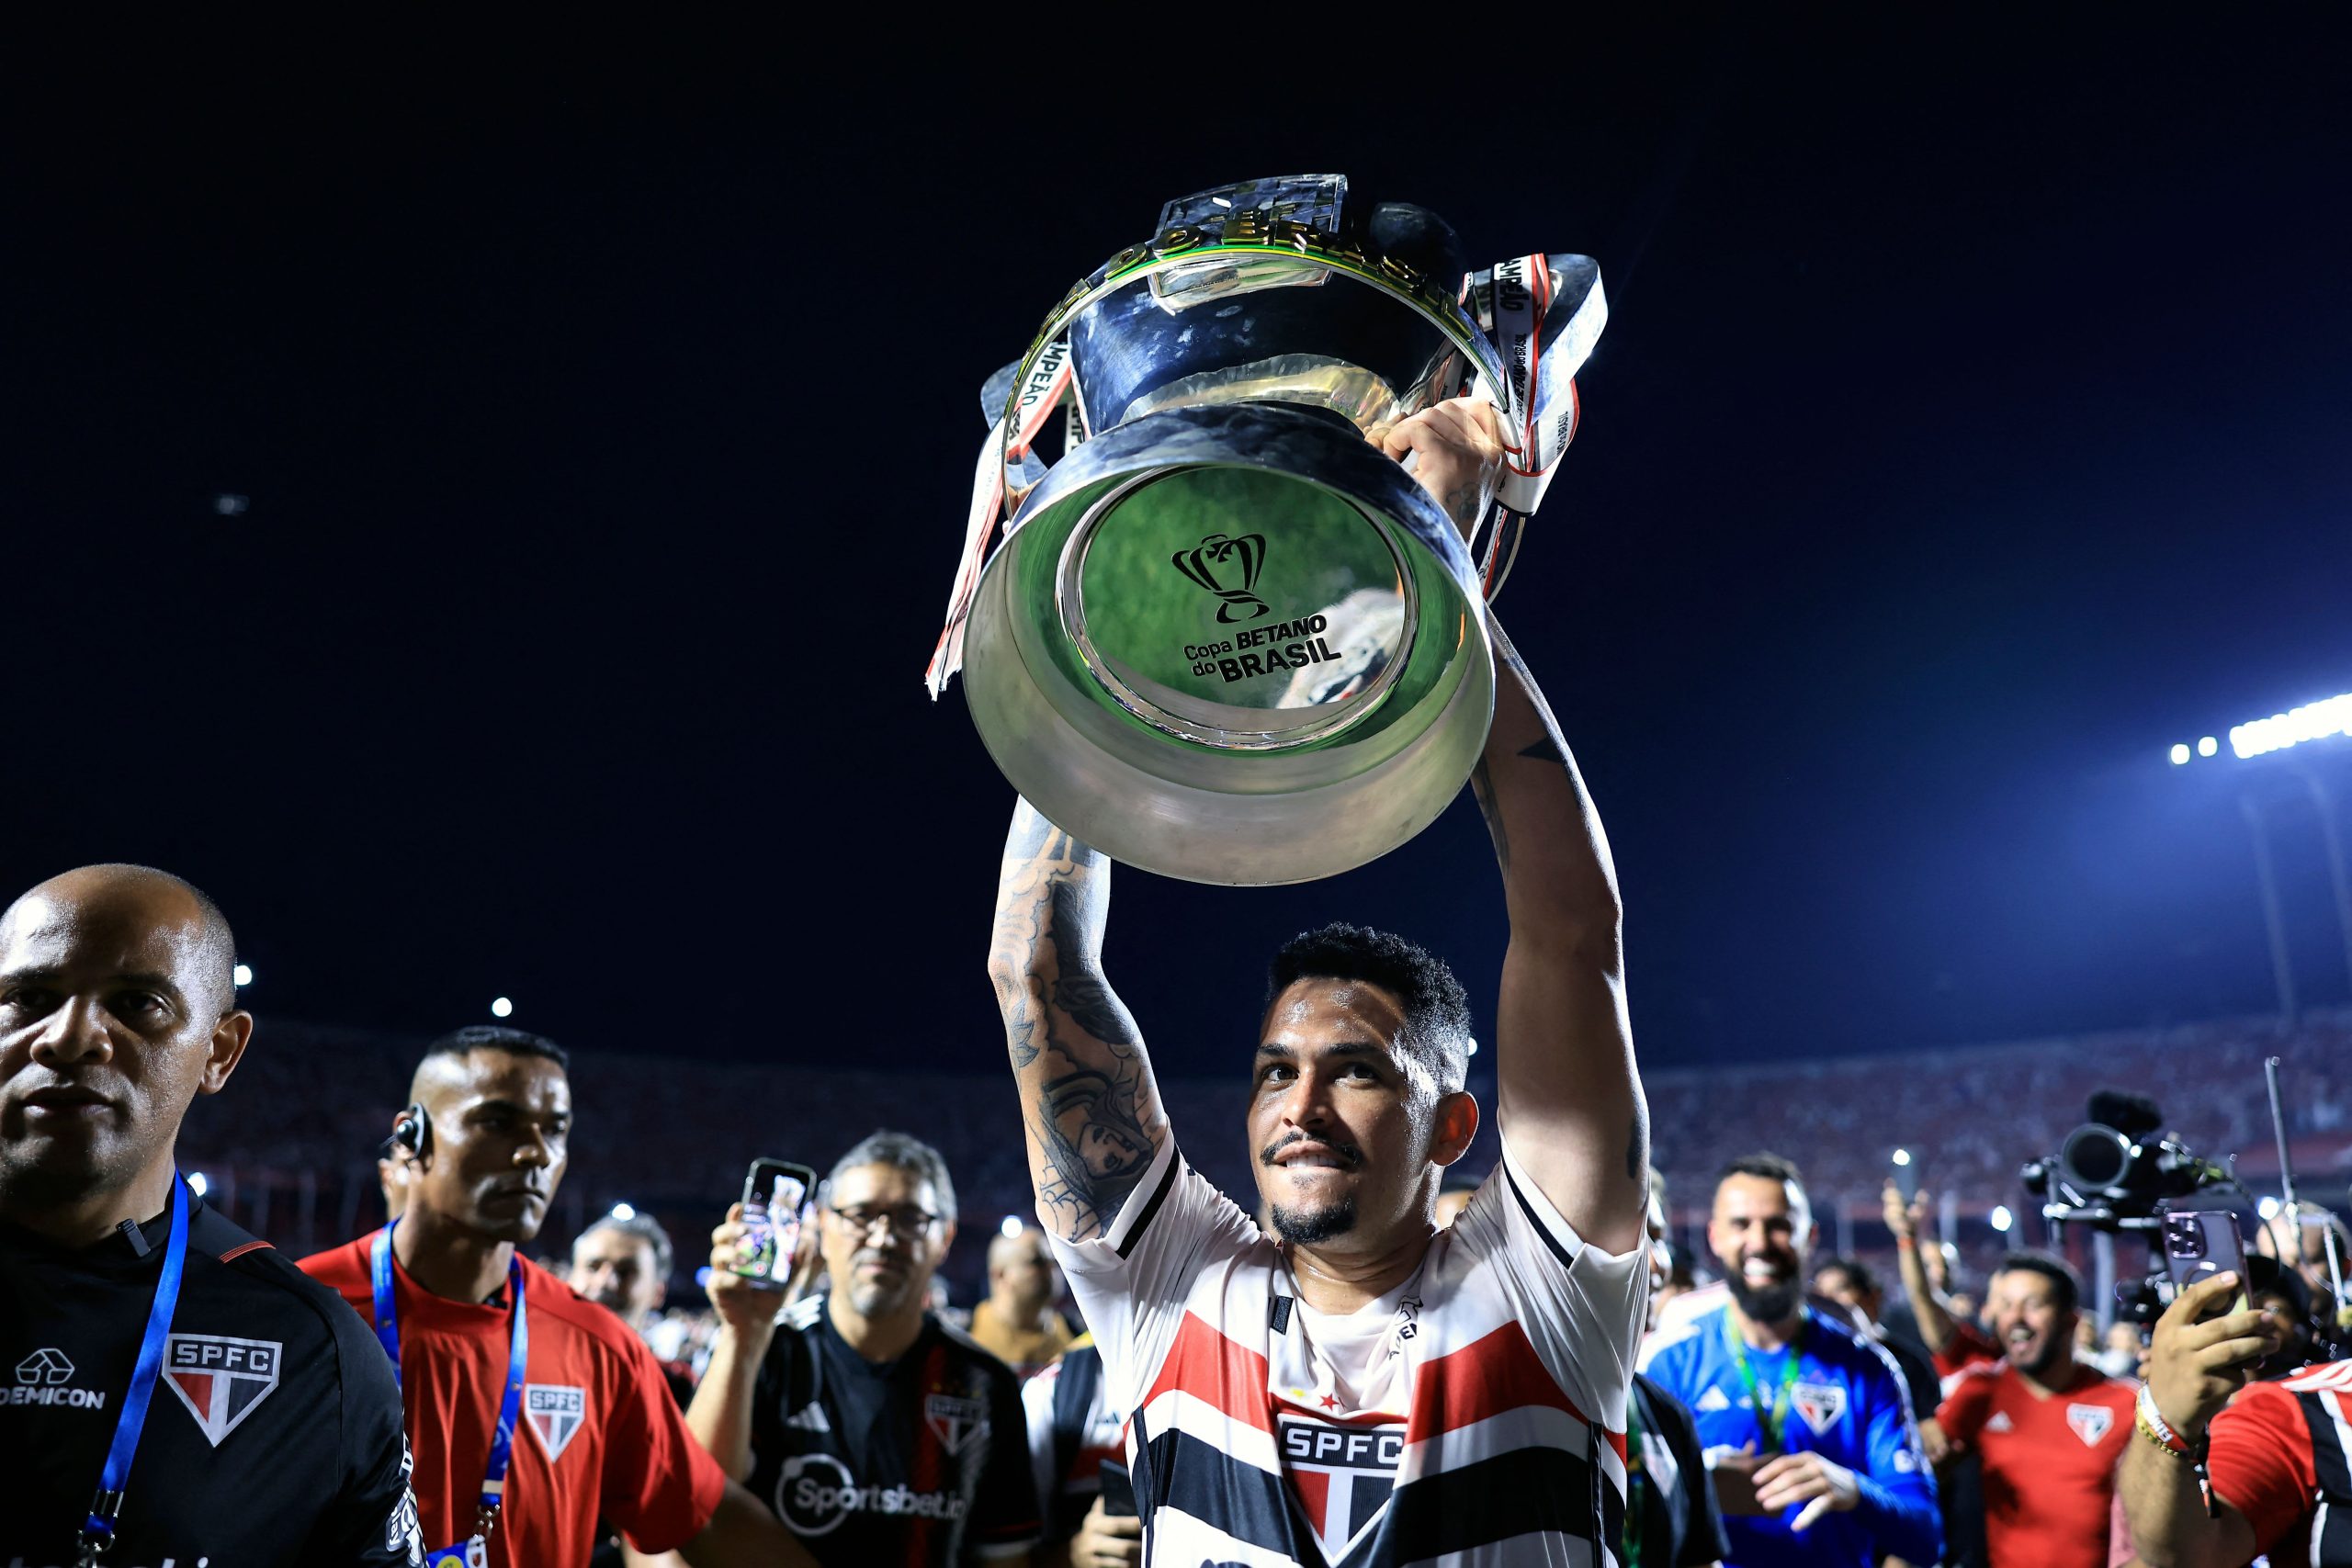 Luciano "agradece" ao Flamengo por Dorival e manda indireta após título do São Paulo na Copa do Brasil (Photo by Marcello Zambrana / AFP) (Photo by MARCELLO ZAMBRANA/AFP via Getty Images)